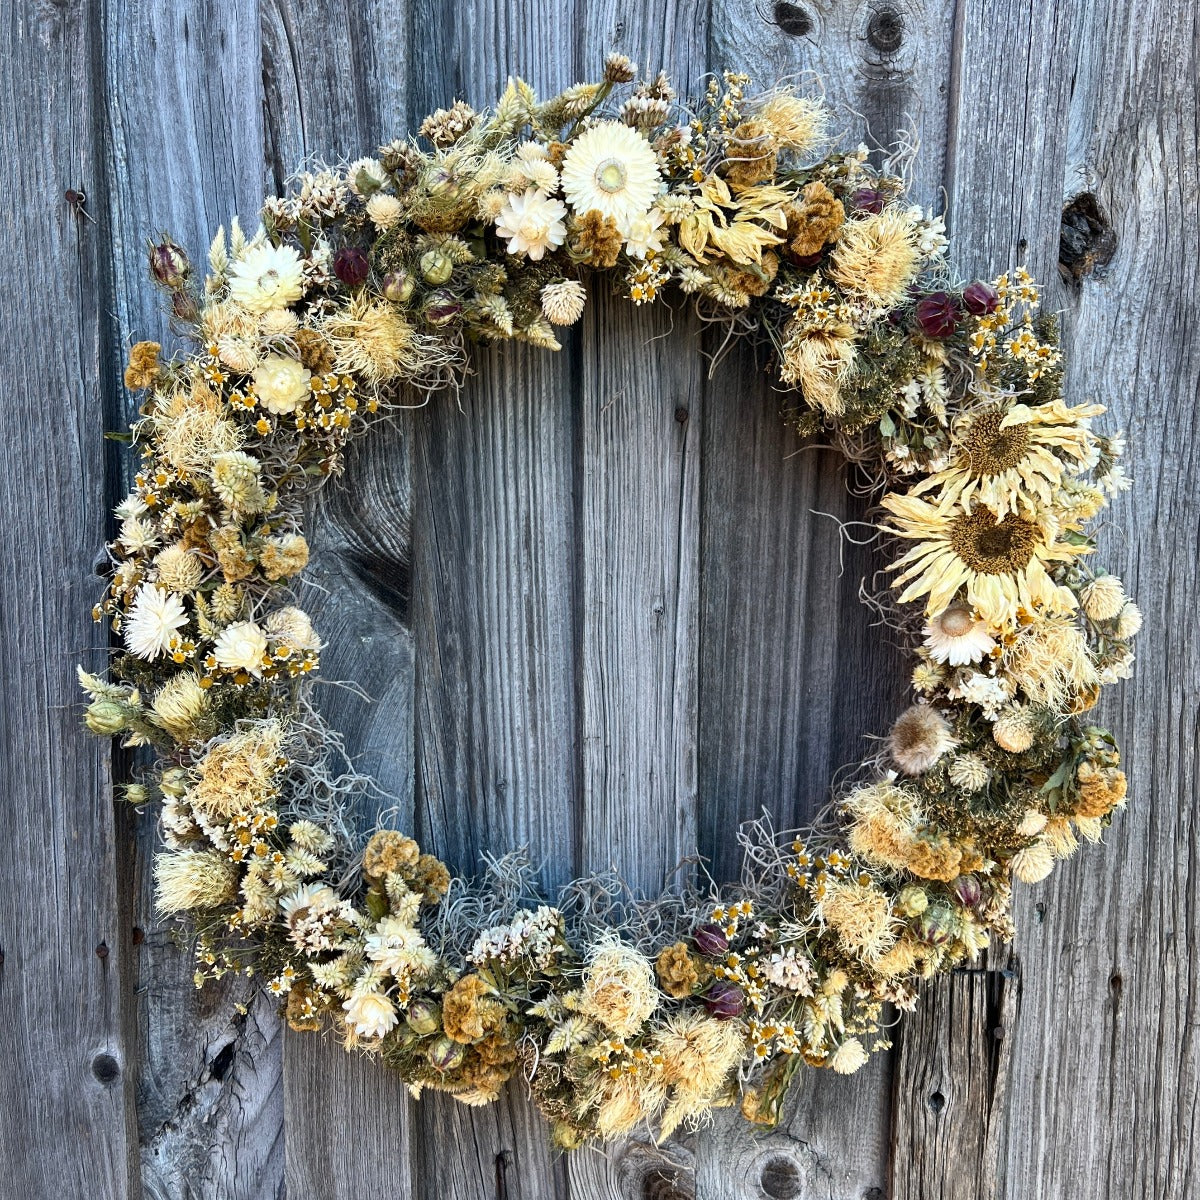 Dried Flower Everlasting Wreath